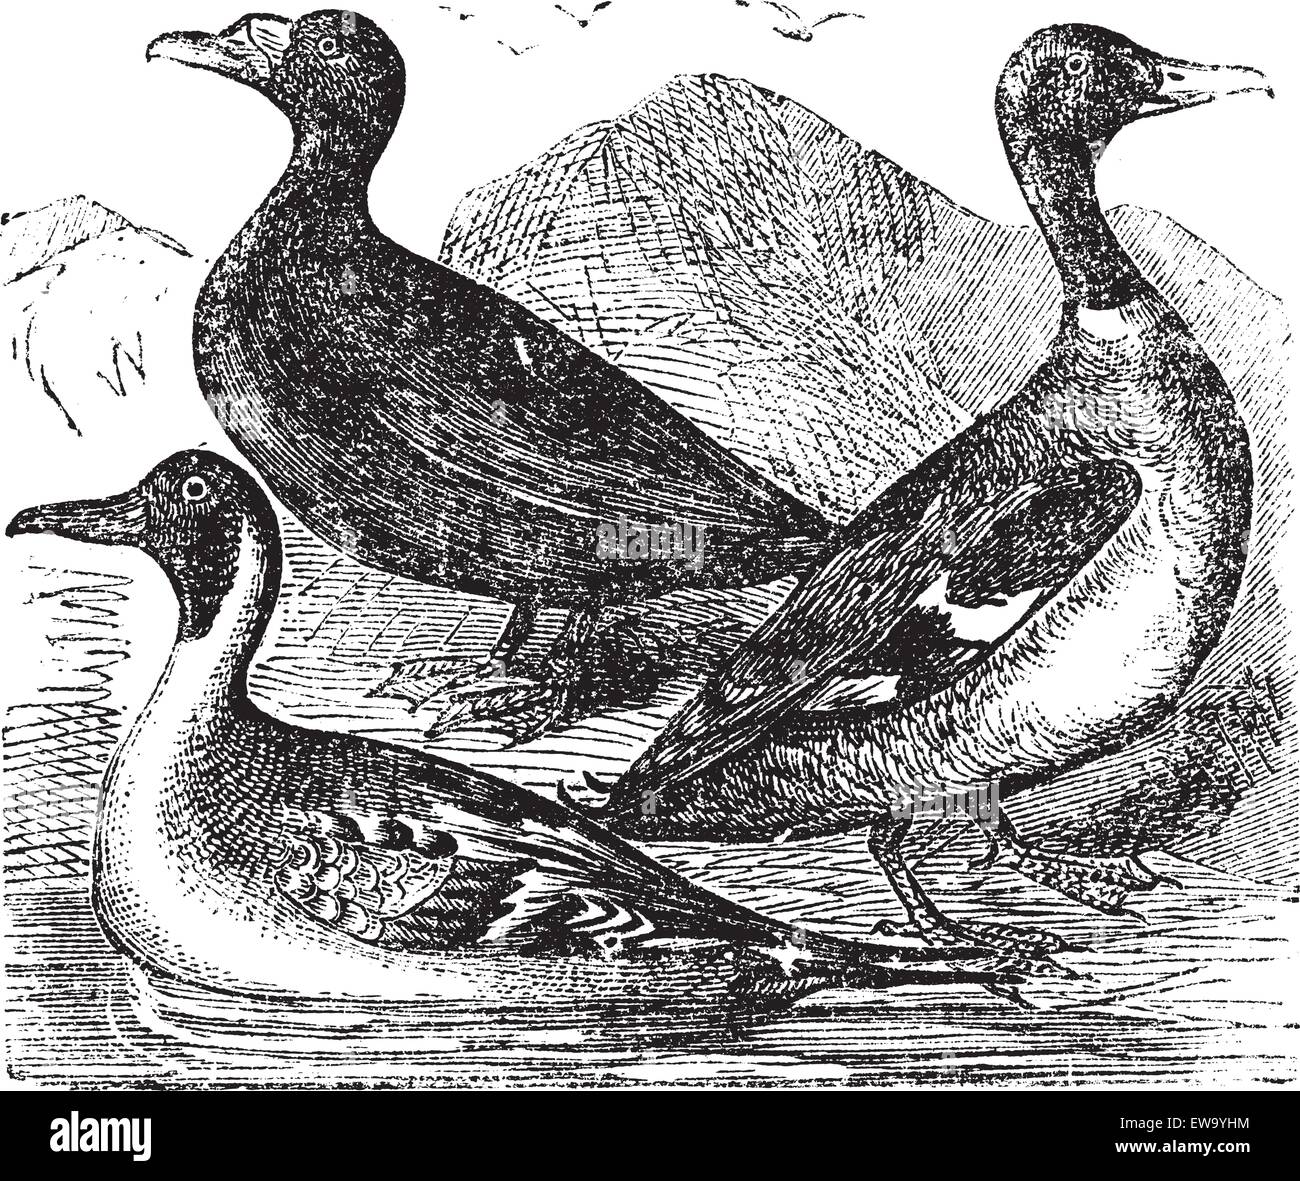 Mallard, Northern Shoveler and common duck or  freshwater duck, drake vintage engraving. Old engraved illustration of wild ducks floating on pond. Stock Vector